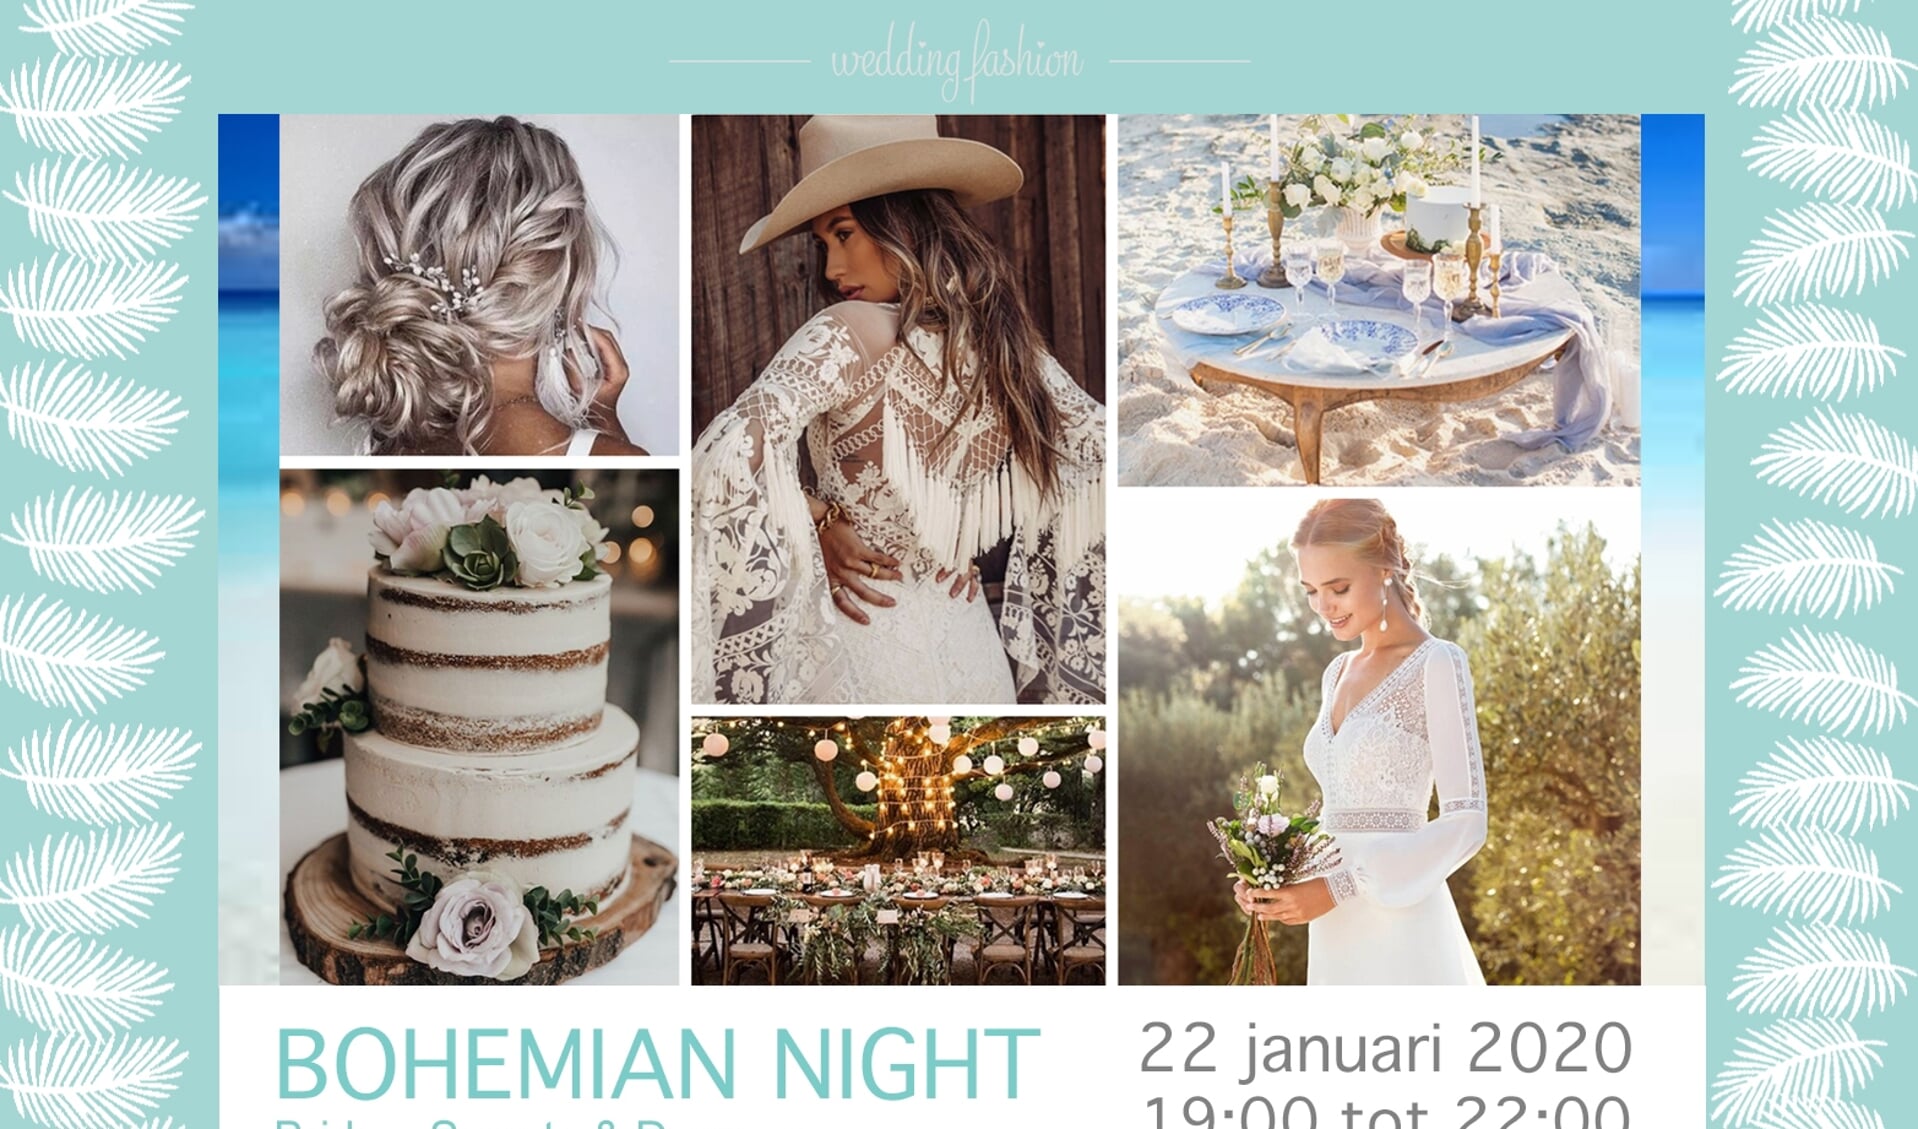 Bohemian Night 2020 - Valkengoed Wedding Fashion Amersfoort